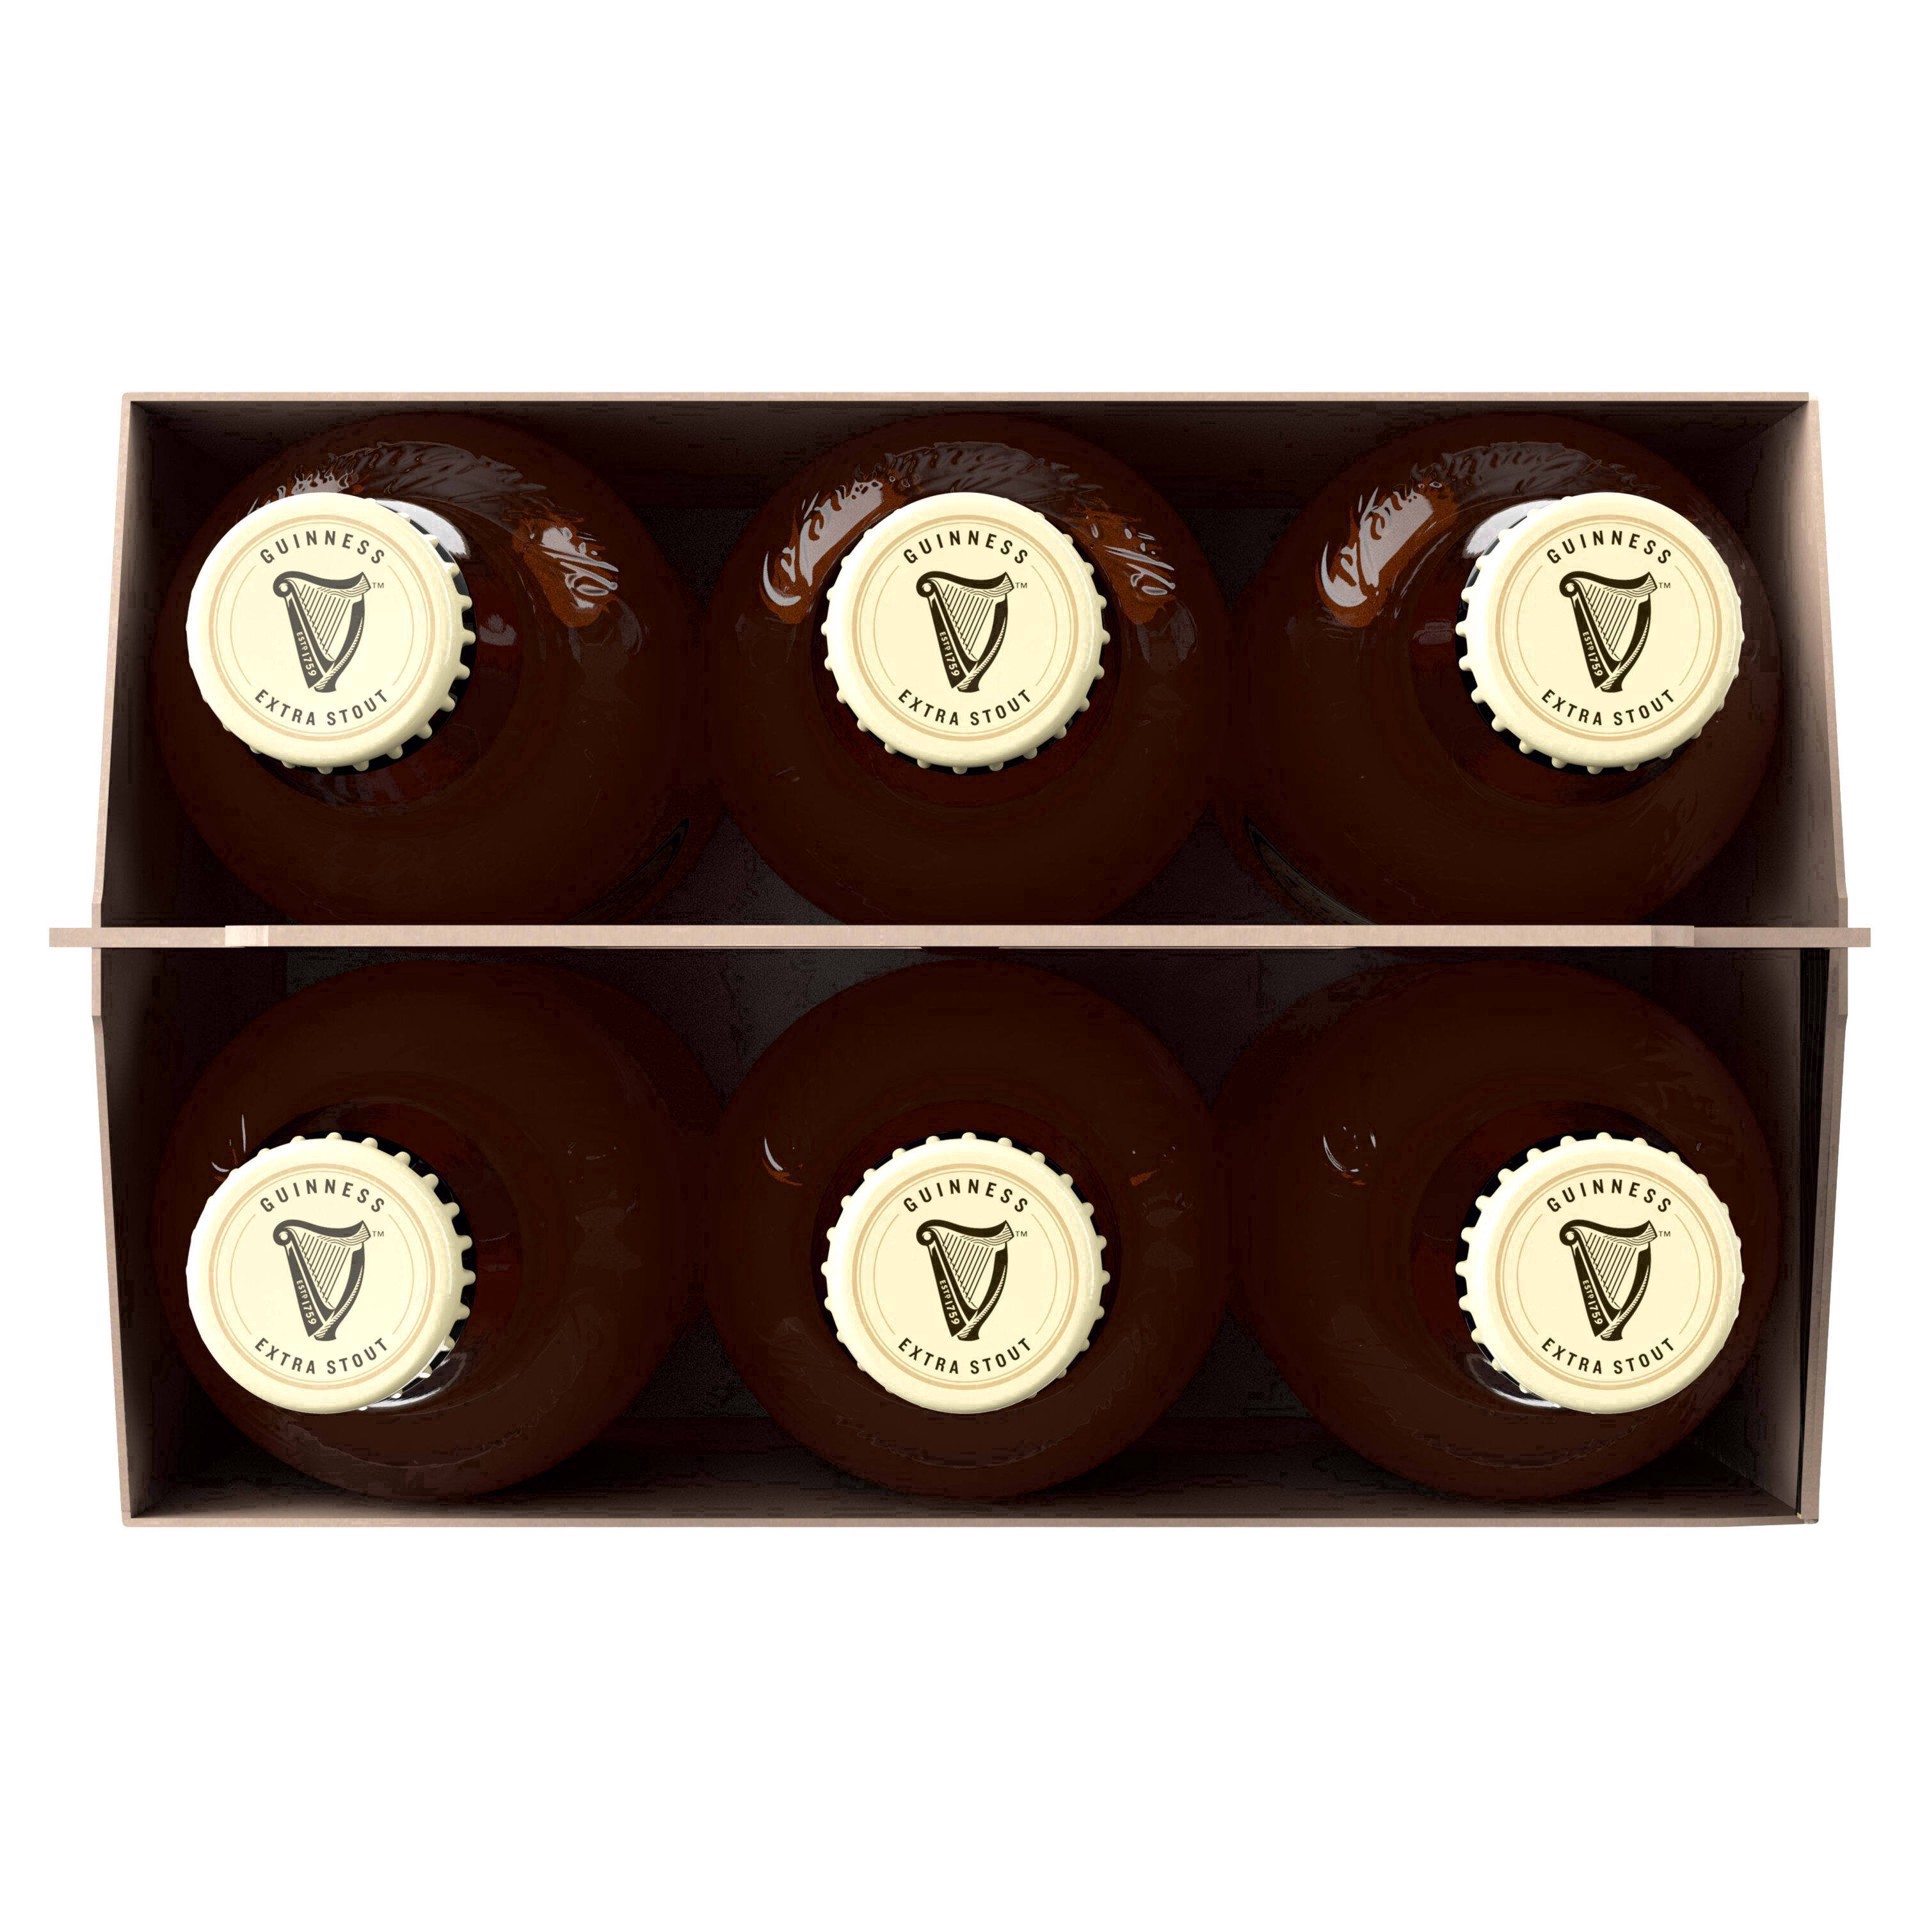 slide 65 of 89, Guinness Extra Stout Import Beer, 11.2 fl oz, 6 Pack Bottles, 5.6% ABV, 11.2 fl oz